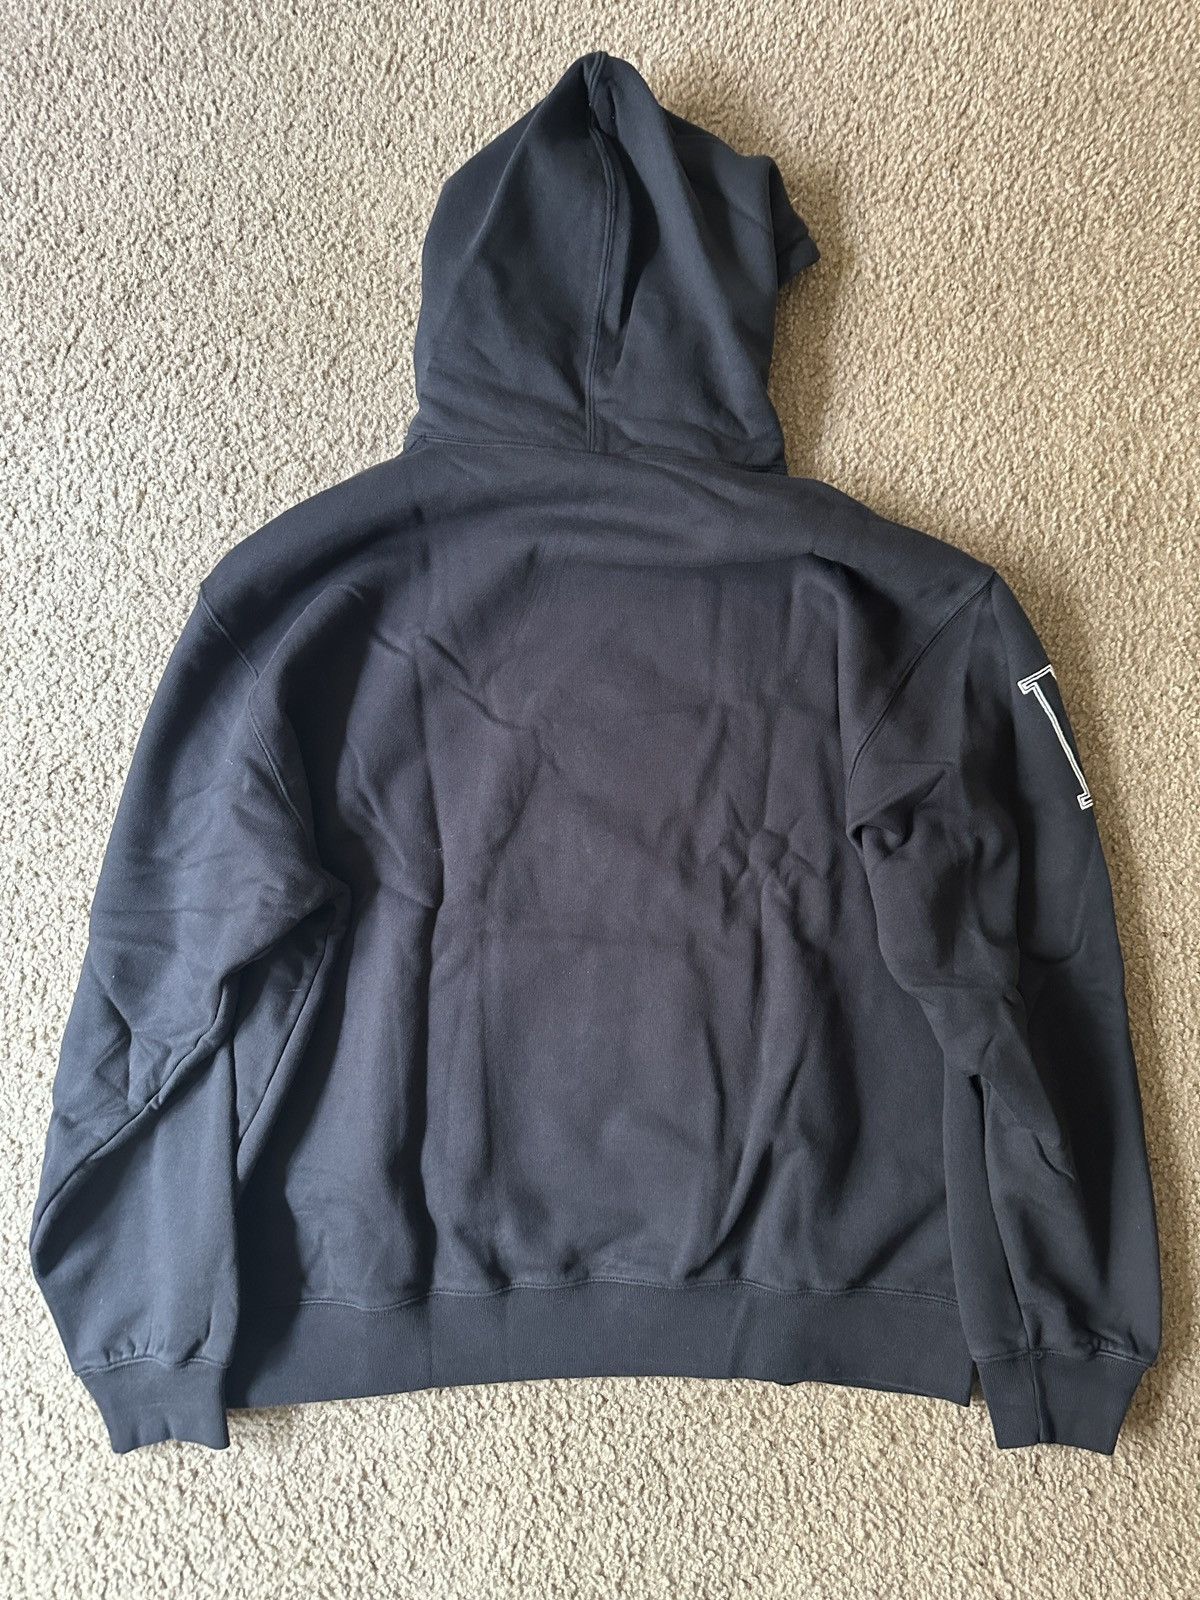 Supreme Supreme®/Nike® hooded sweatshirt Black | Grailed